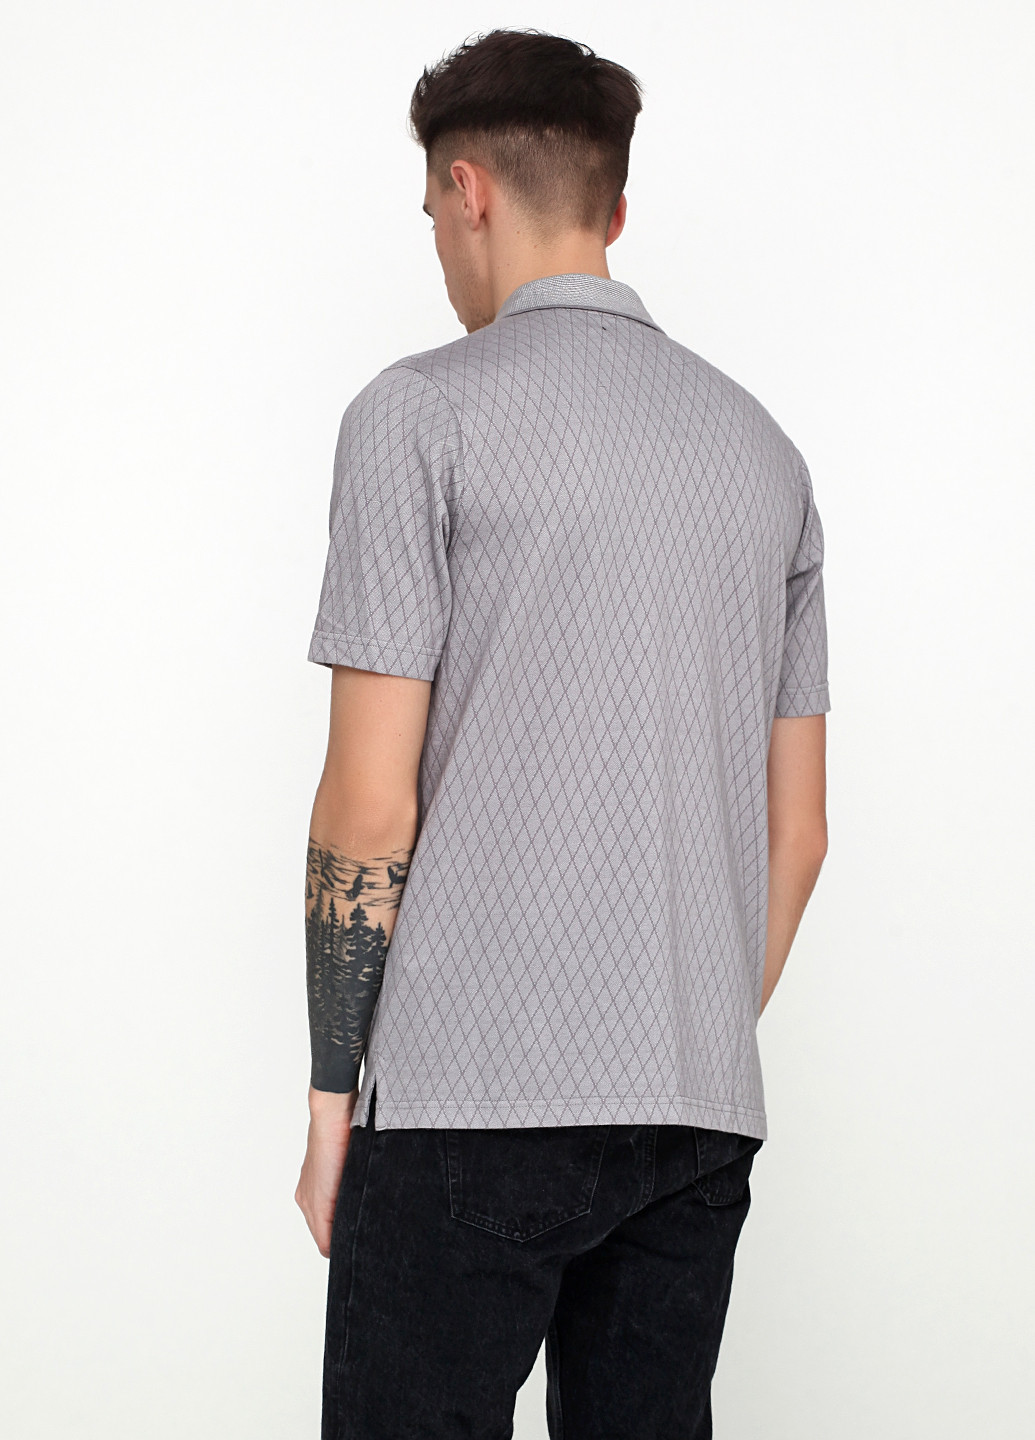 Серая футболка-поло для мужчин Belika с геометрическим узором